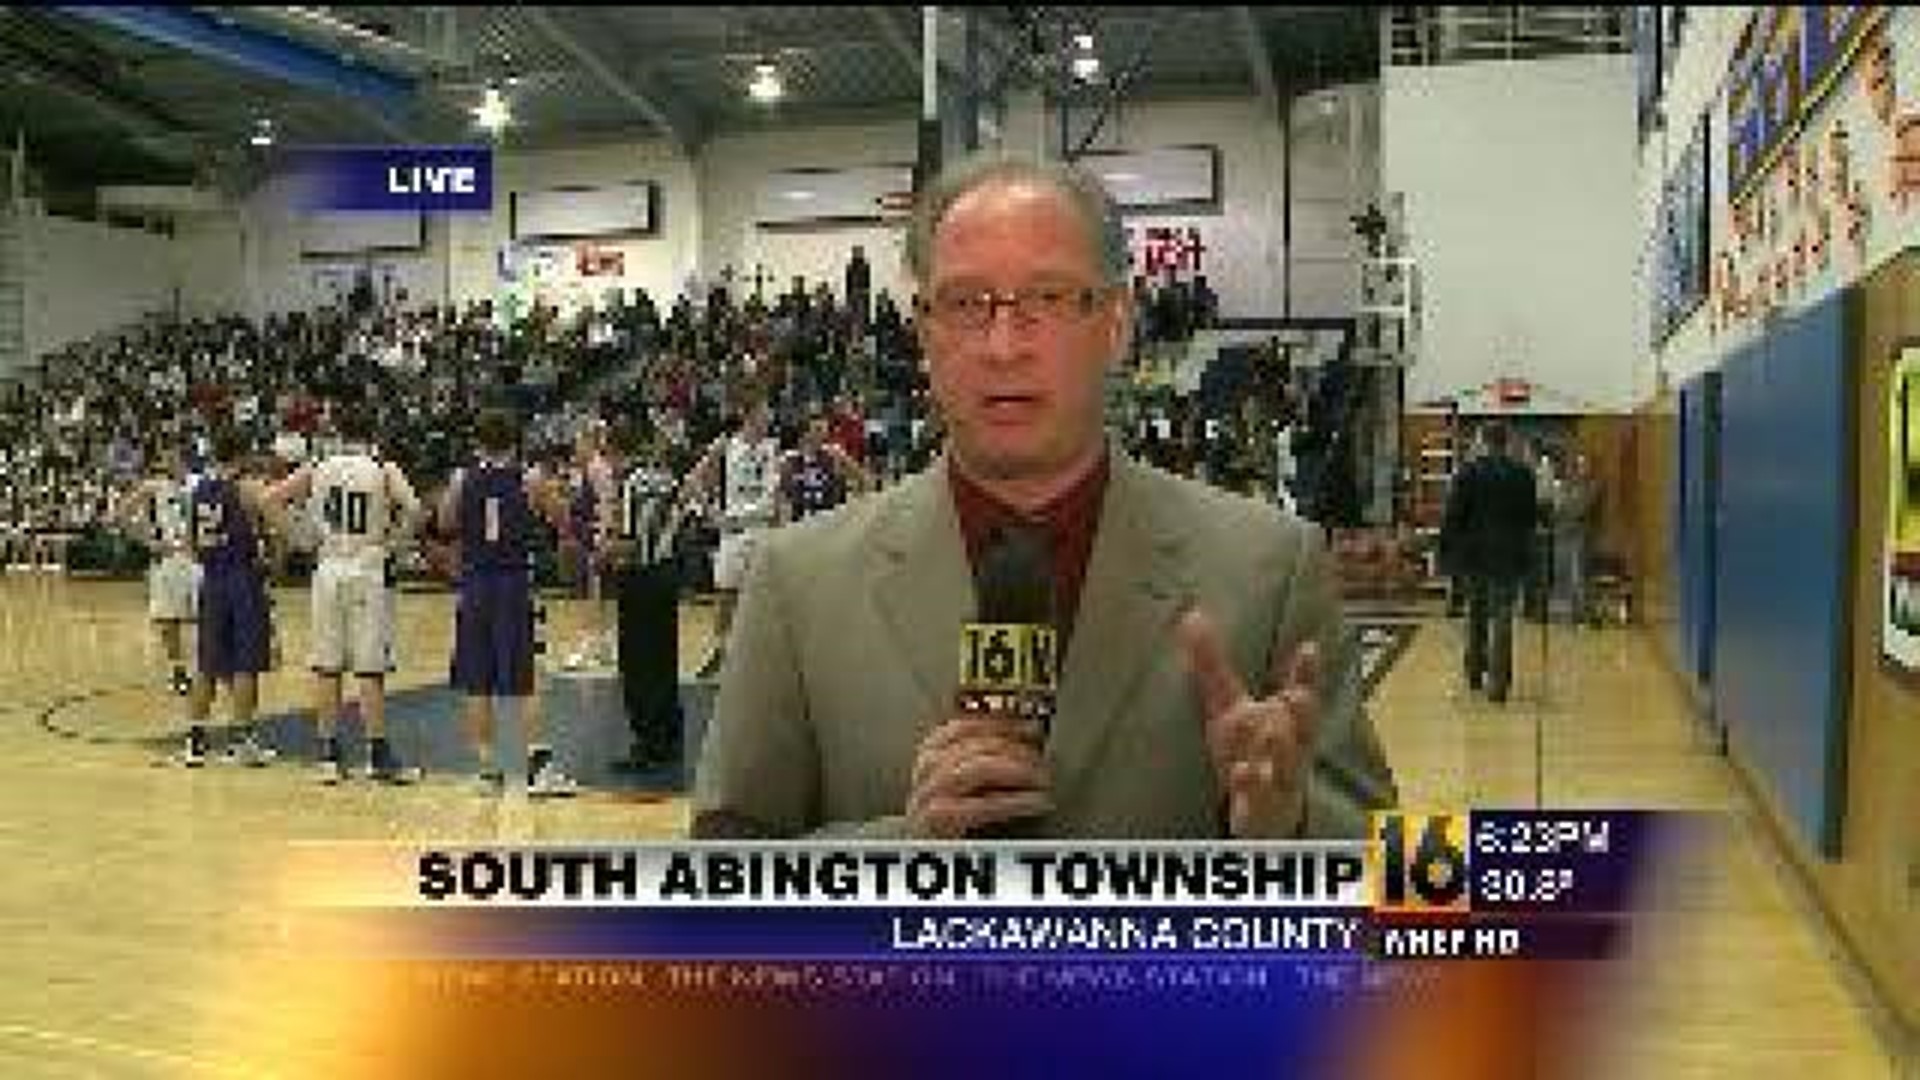 Sports live South Abington Township